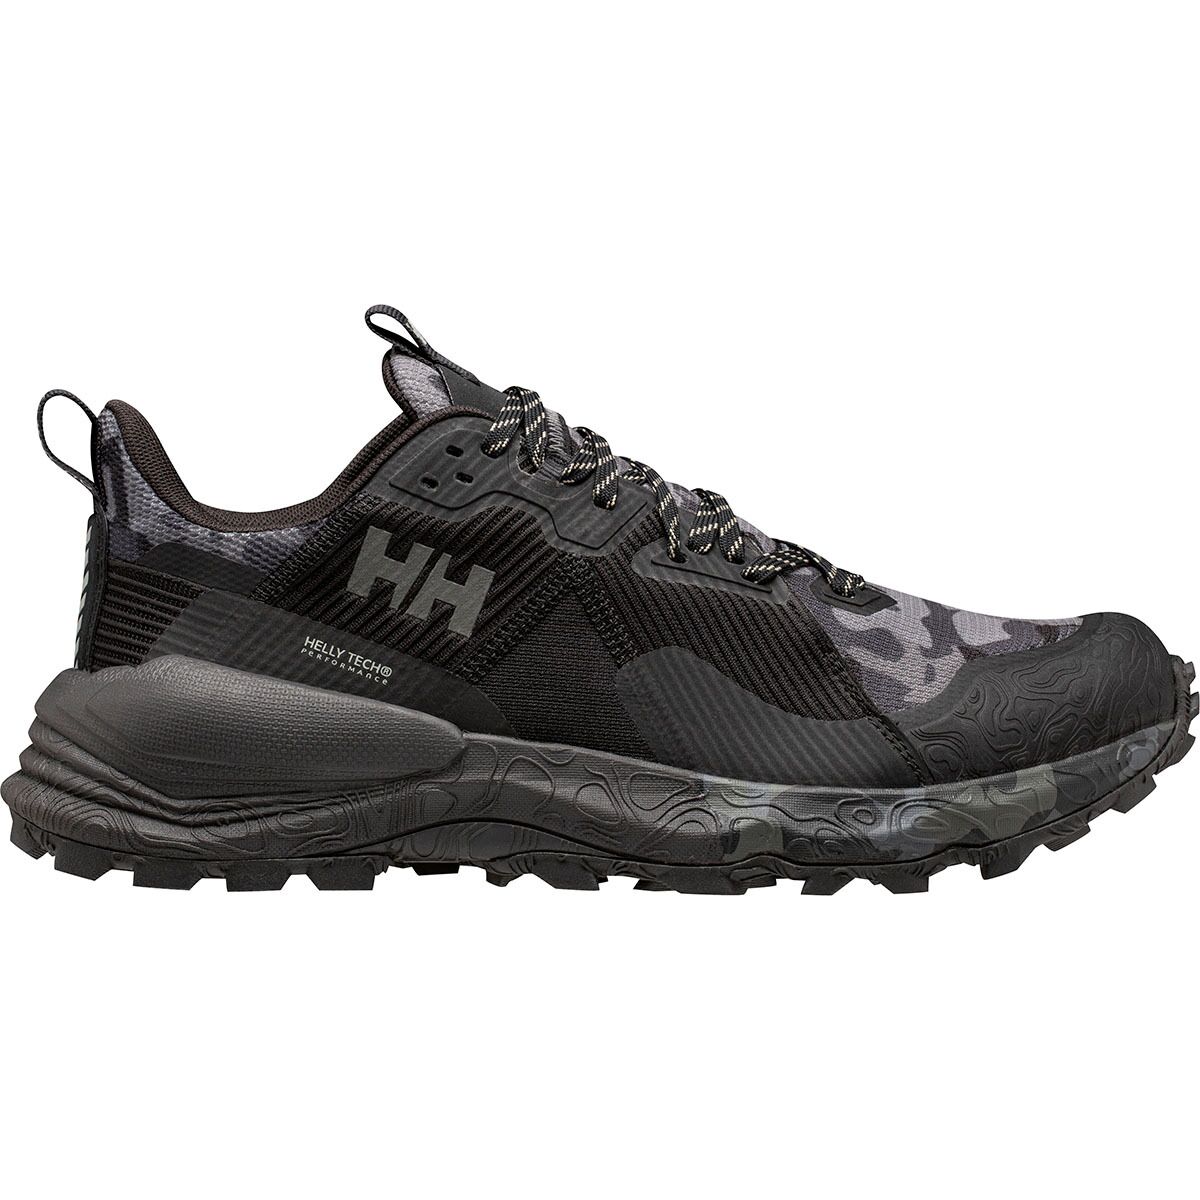 Helly Hansen Hawk Stapro HT Trail Running Shoe - Men's